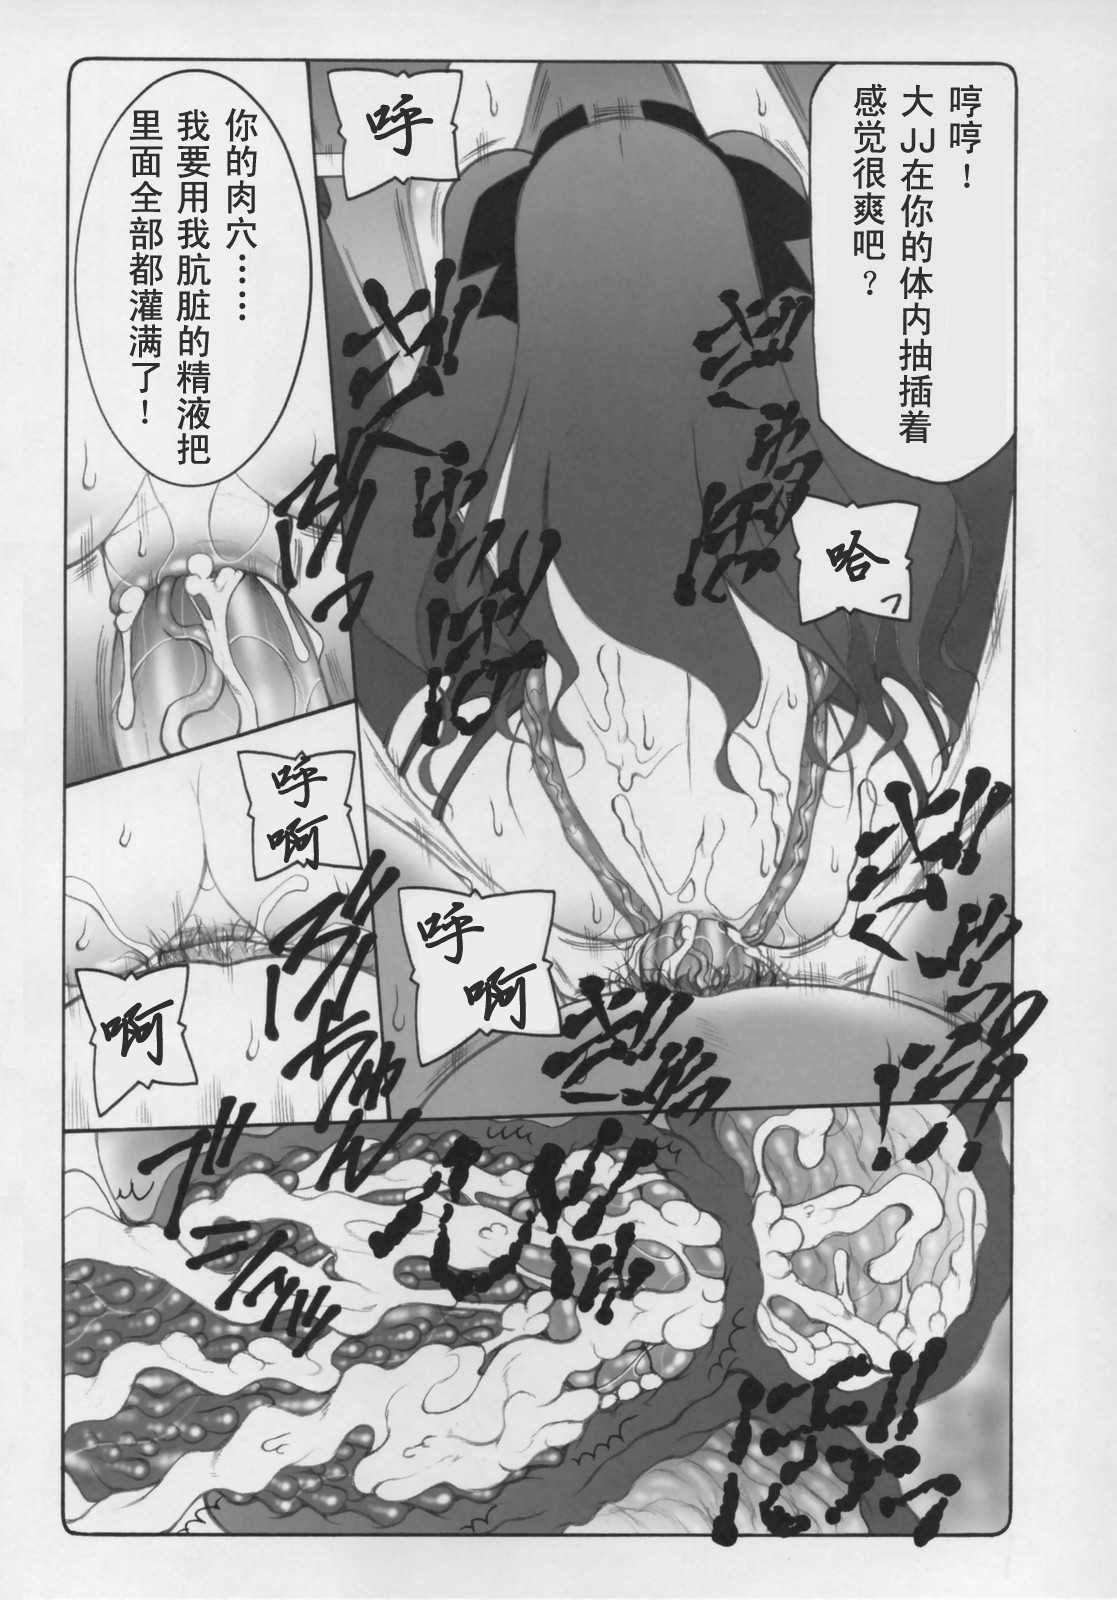 (Comic Castle 2006) [Abarenbow Tengu (Izumi Yuujiro)] Kotori 3 (Fate/stay night) [Chinese] (コミックキャッスル2006) [暴れん坊天狗 (泉ゆうじろー)] 蟲鳥 3 (Fate/stay night) [中国翻訳]